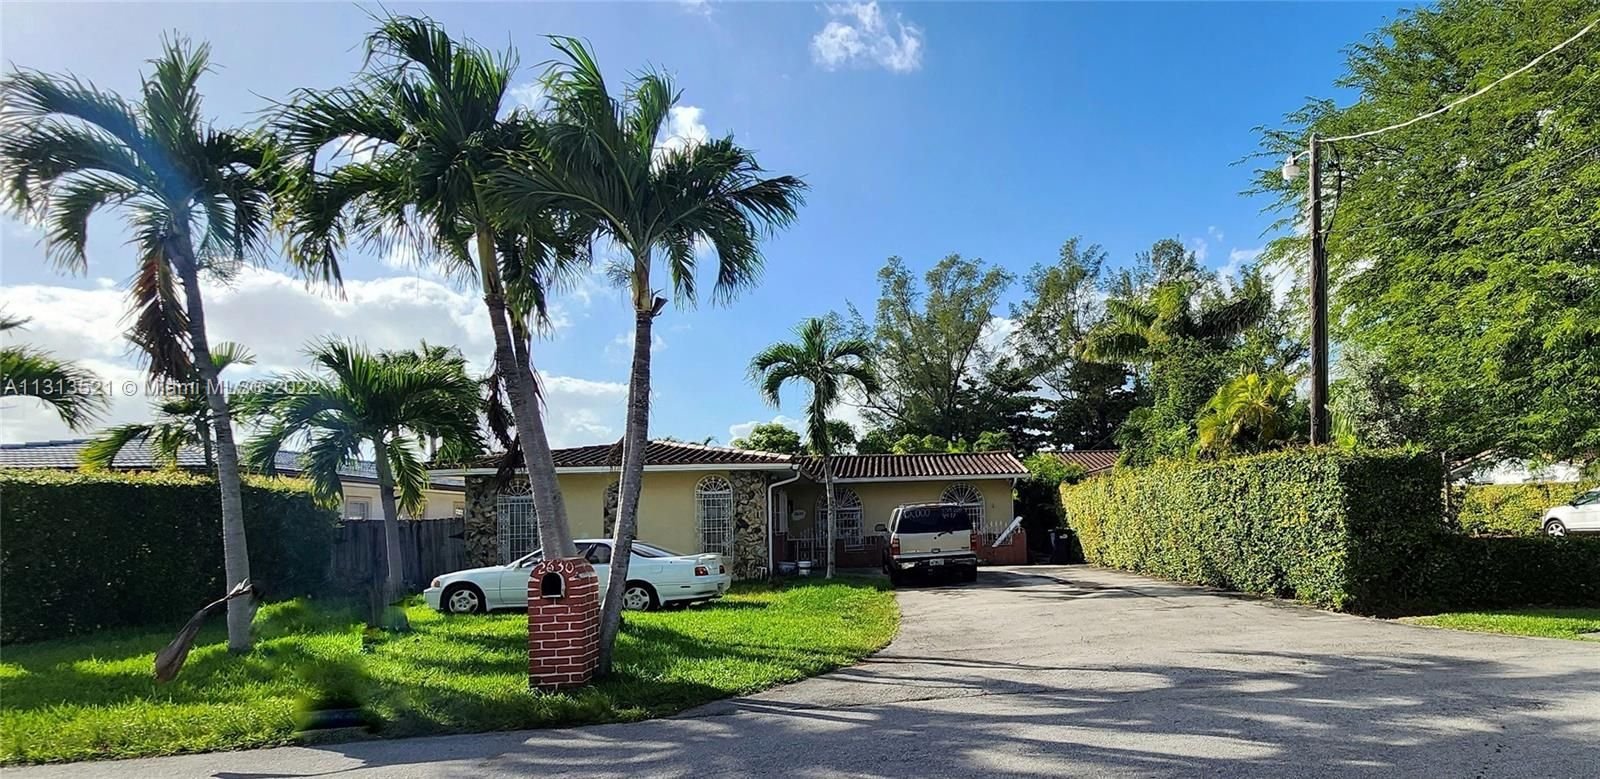 Real estate property located at 2630 115th Ave, Miami-Dade County, Miami, FL